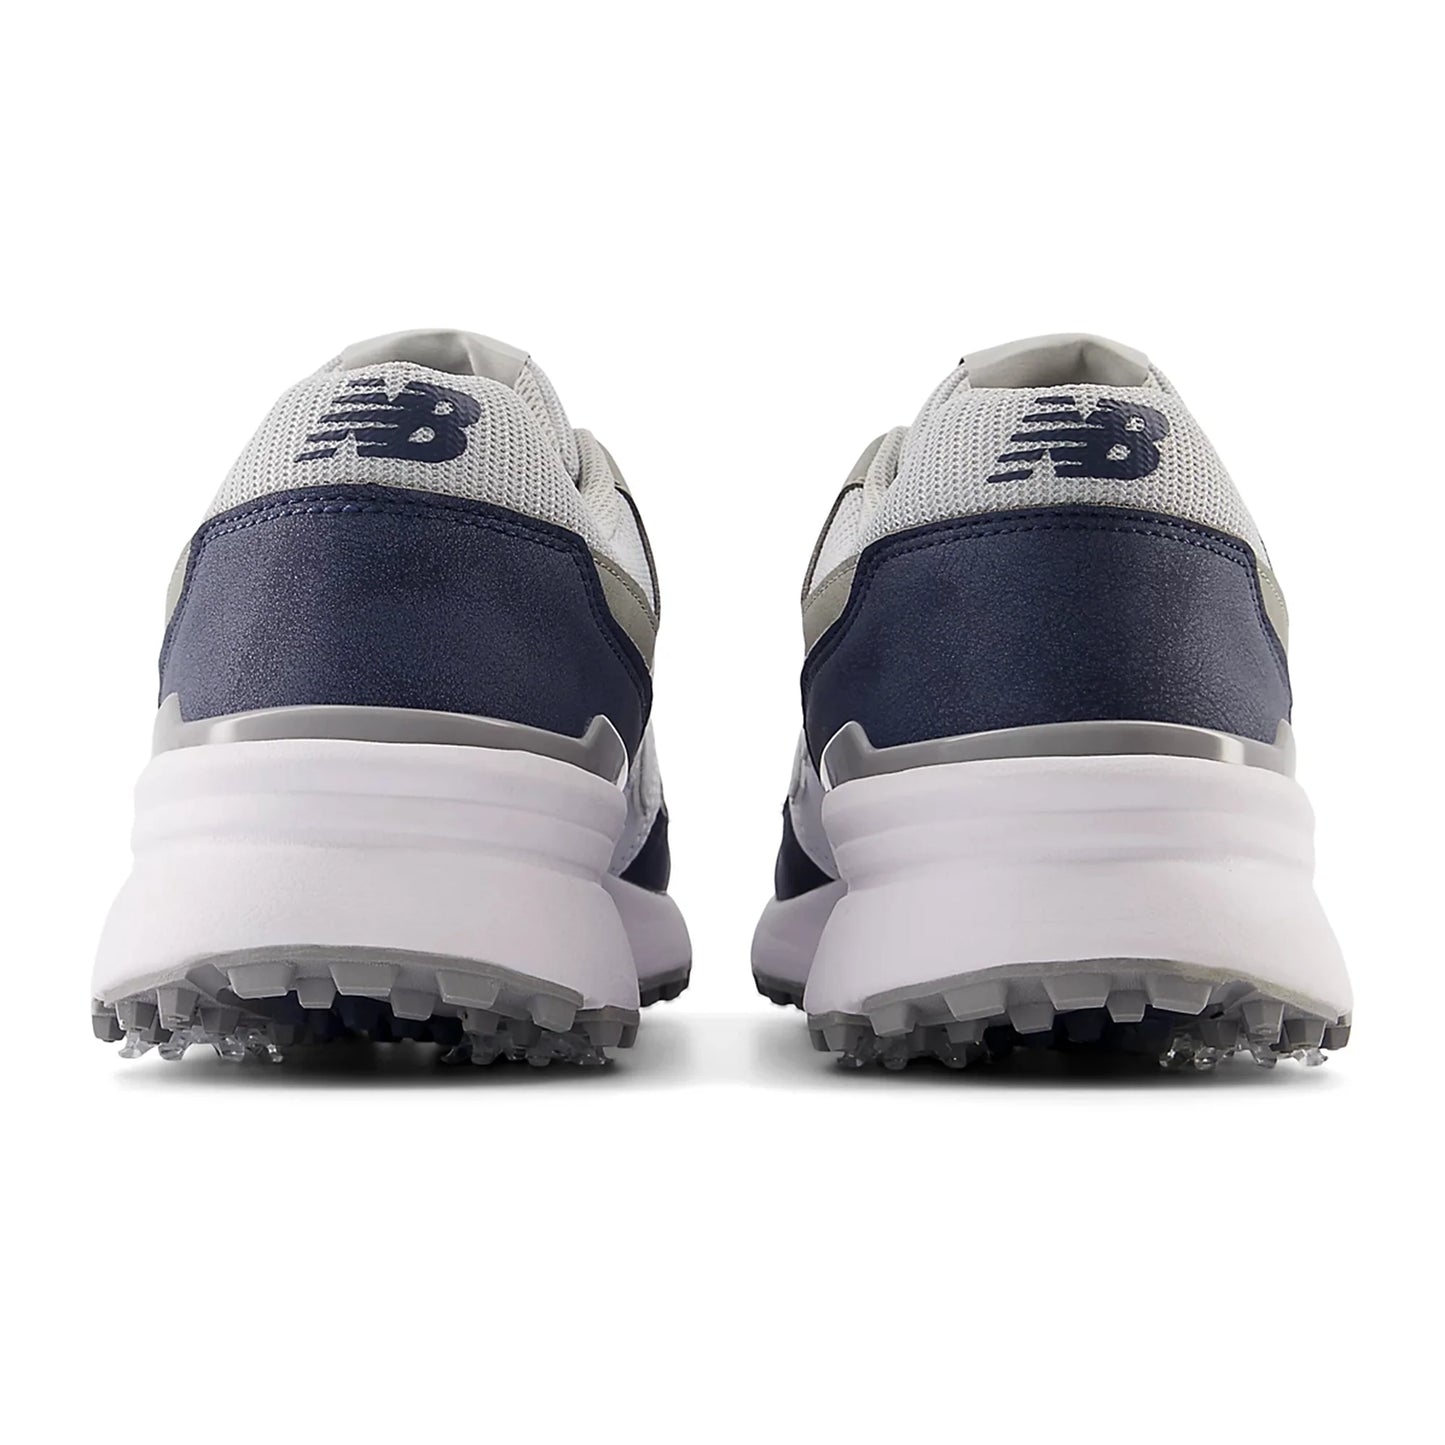 New Balance 997 Golf Shoes - White/Navy